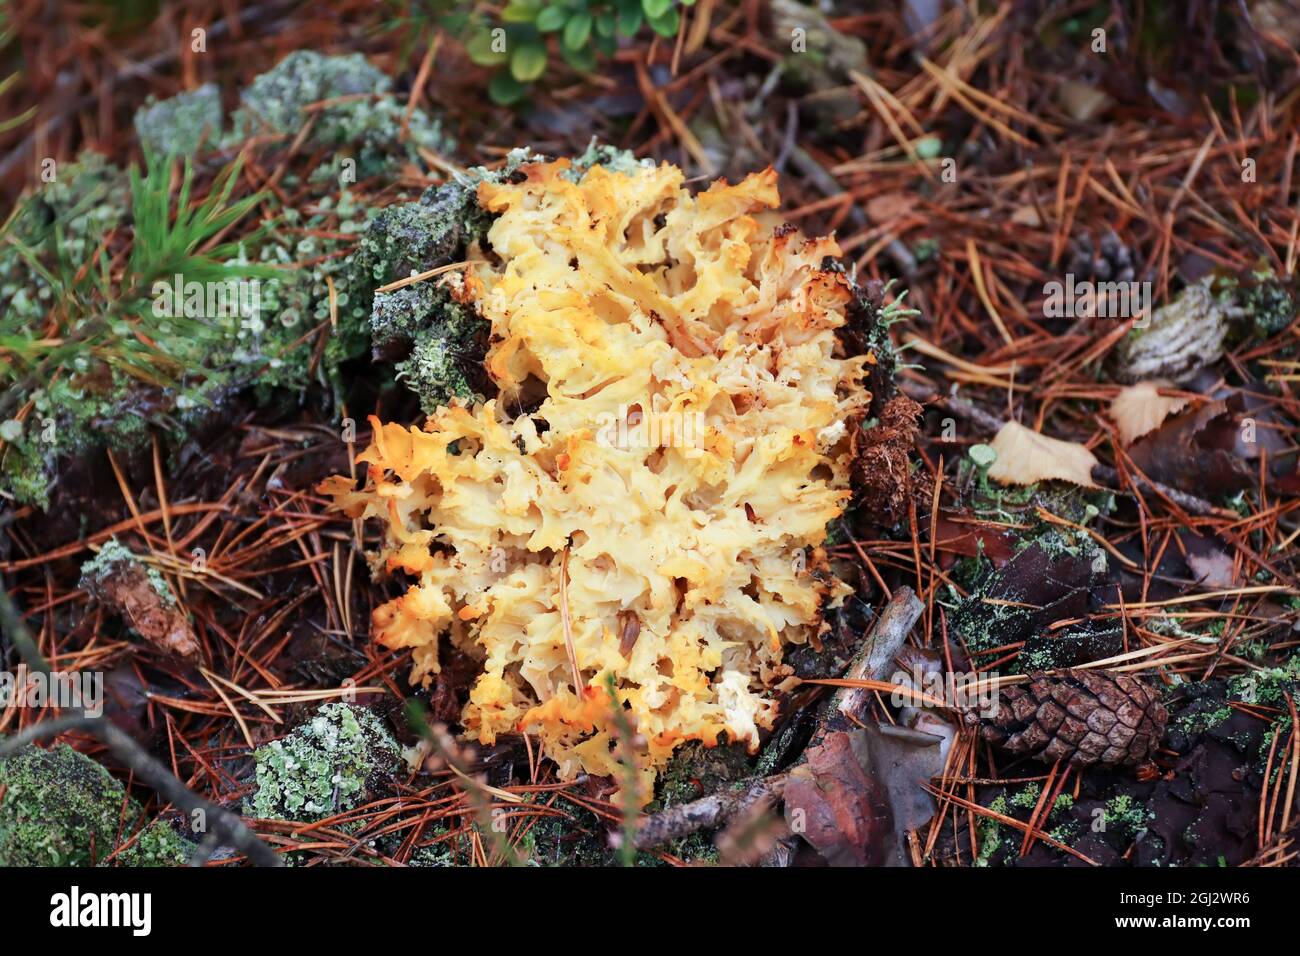 Sparassis crispa sometimes called cauliflower fungus - delicious edible mushroom Stock Photo